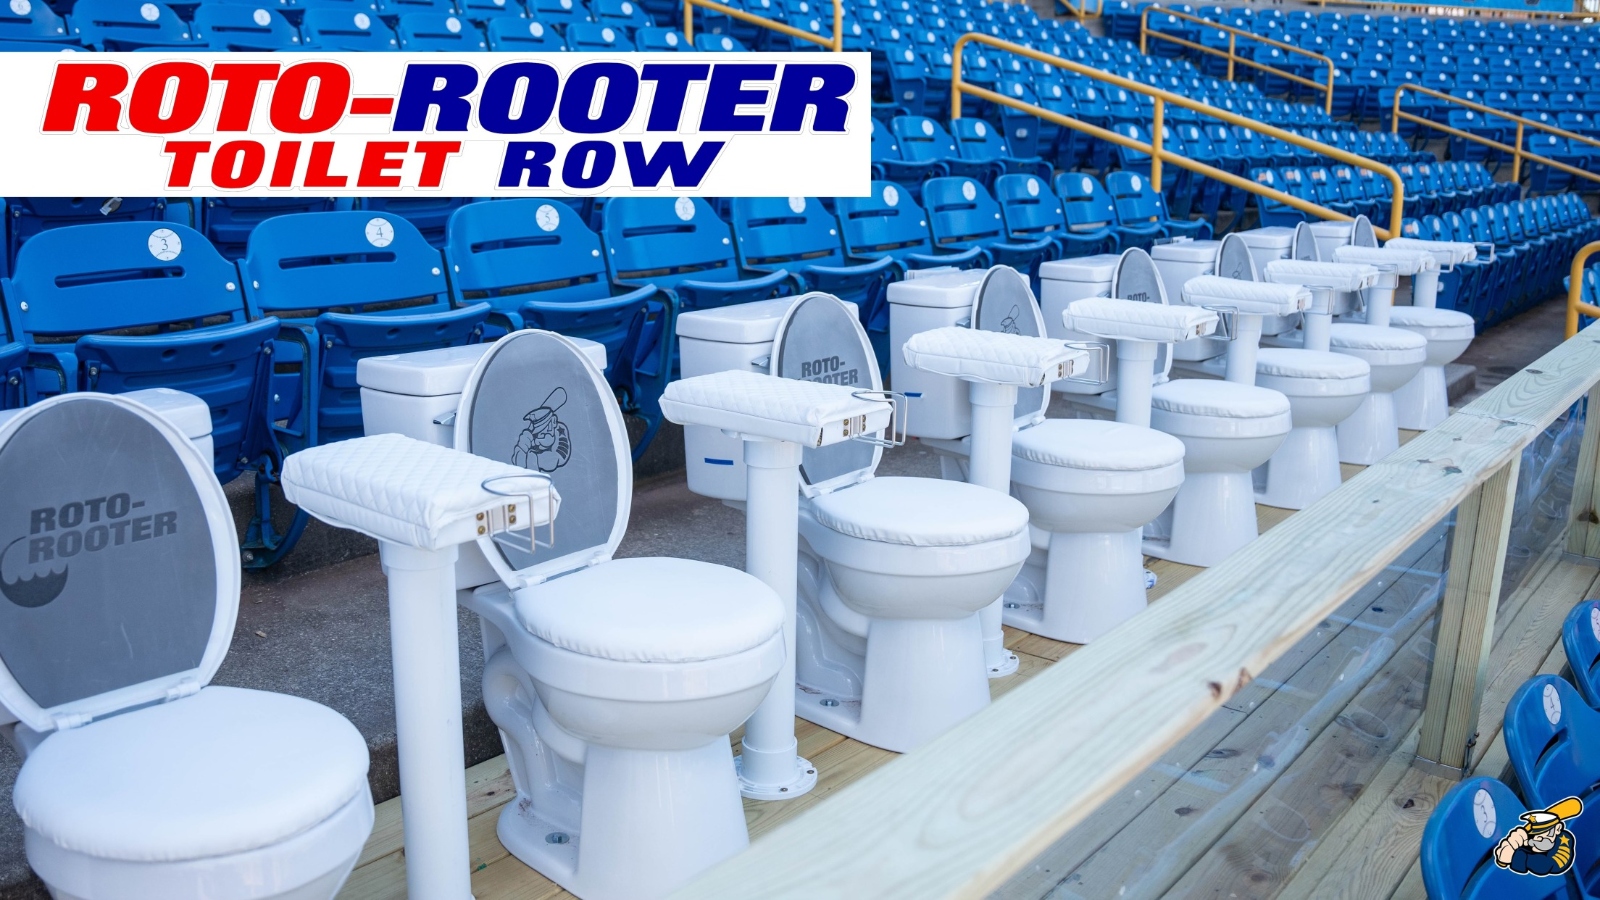 Roto-Rooter Toilet Row actual toilet seats at minor league baseball game